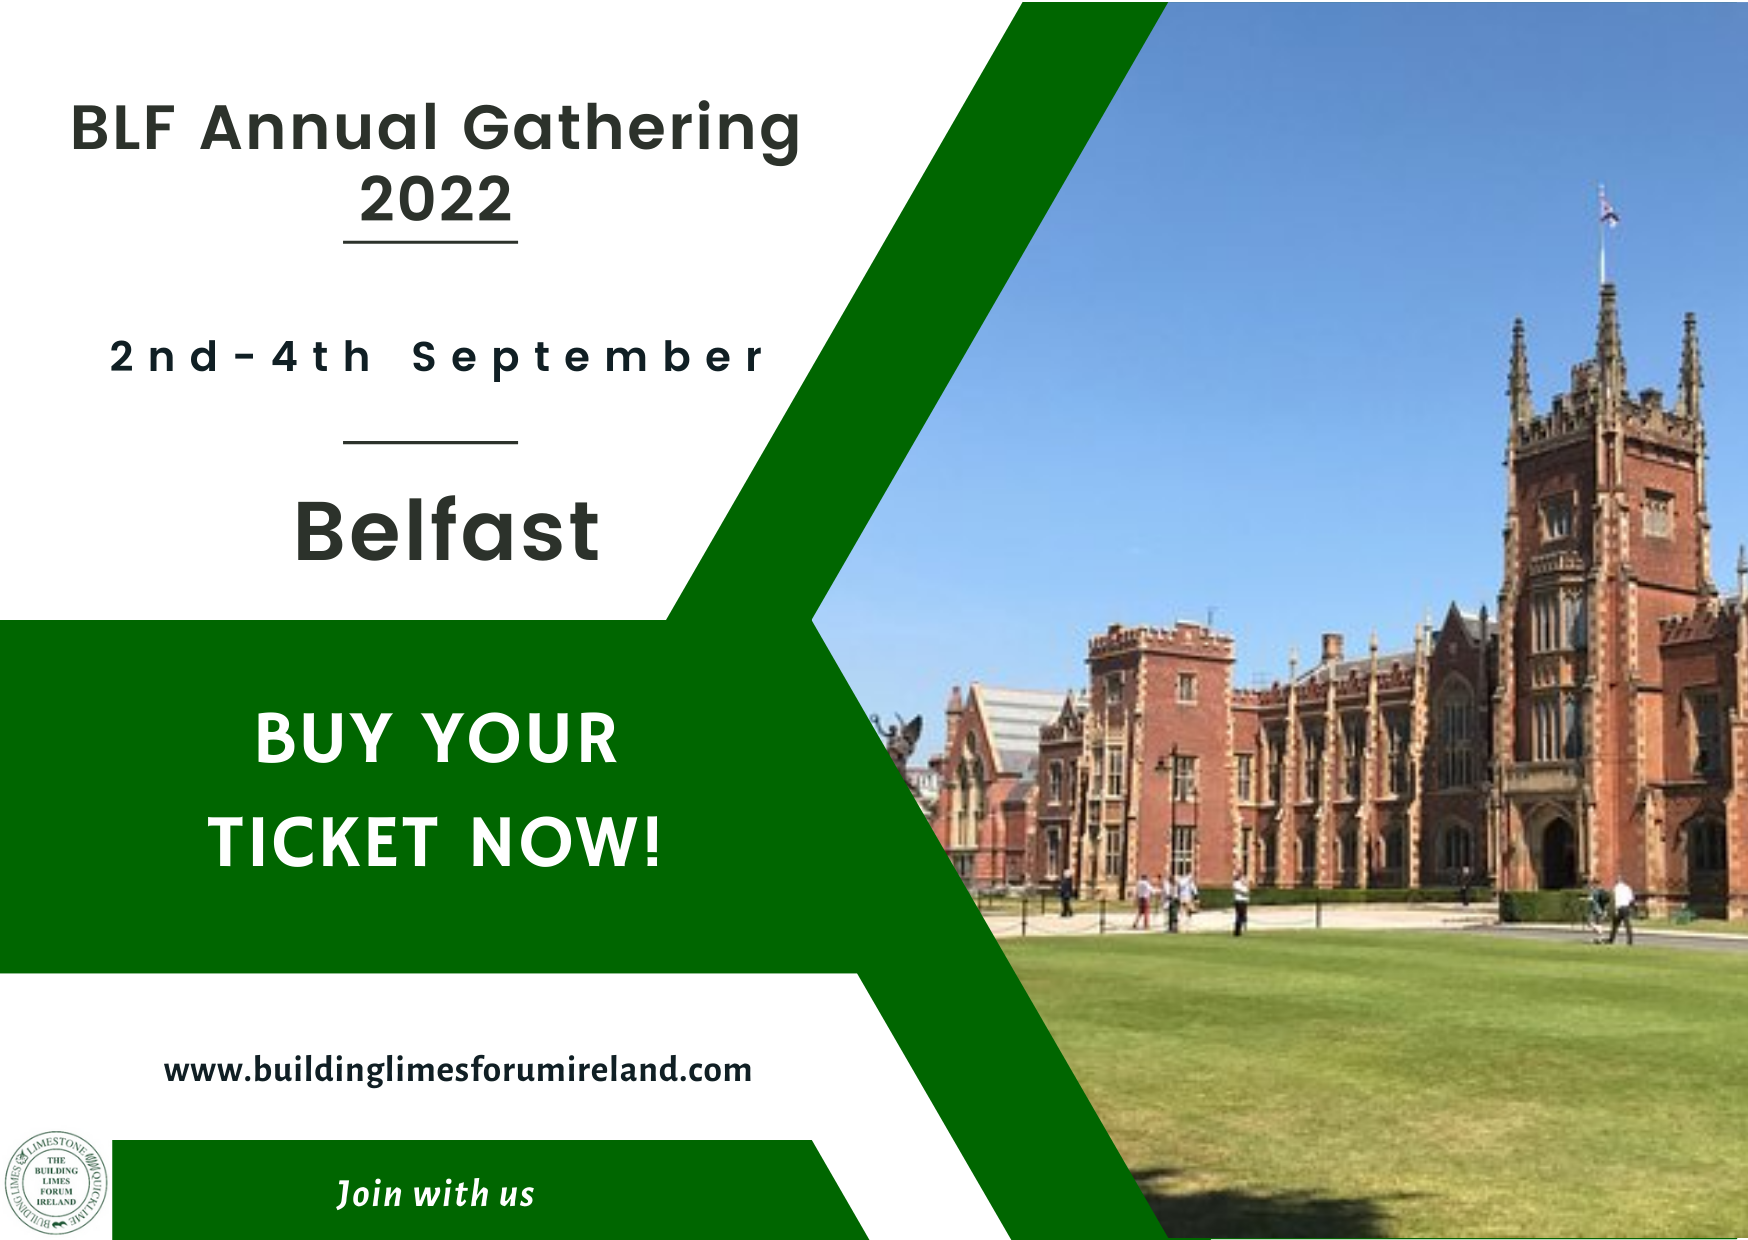 BLFI Annual Gathering 2022